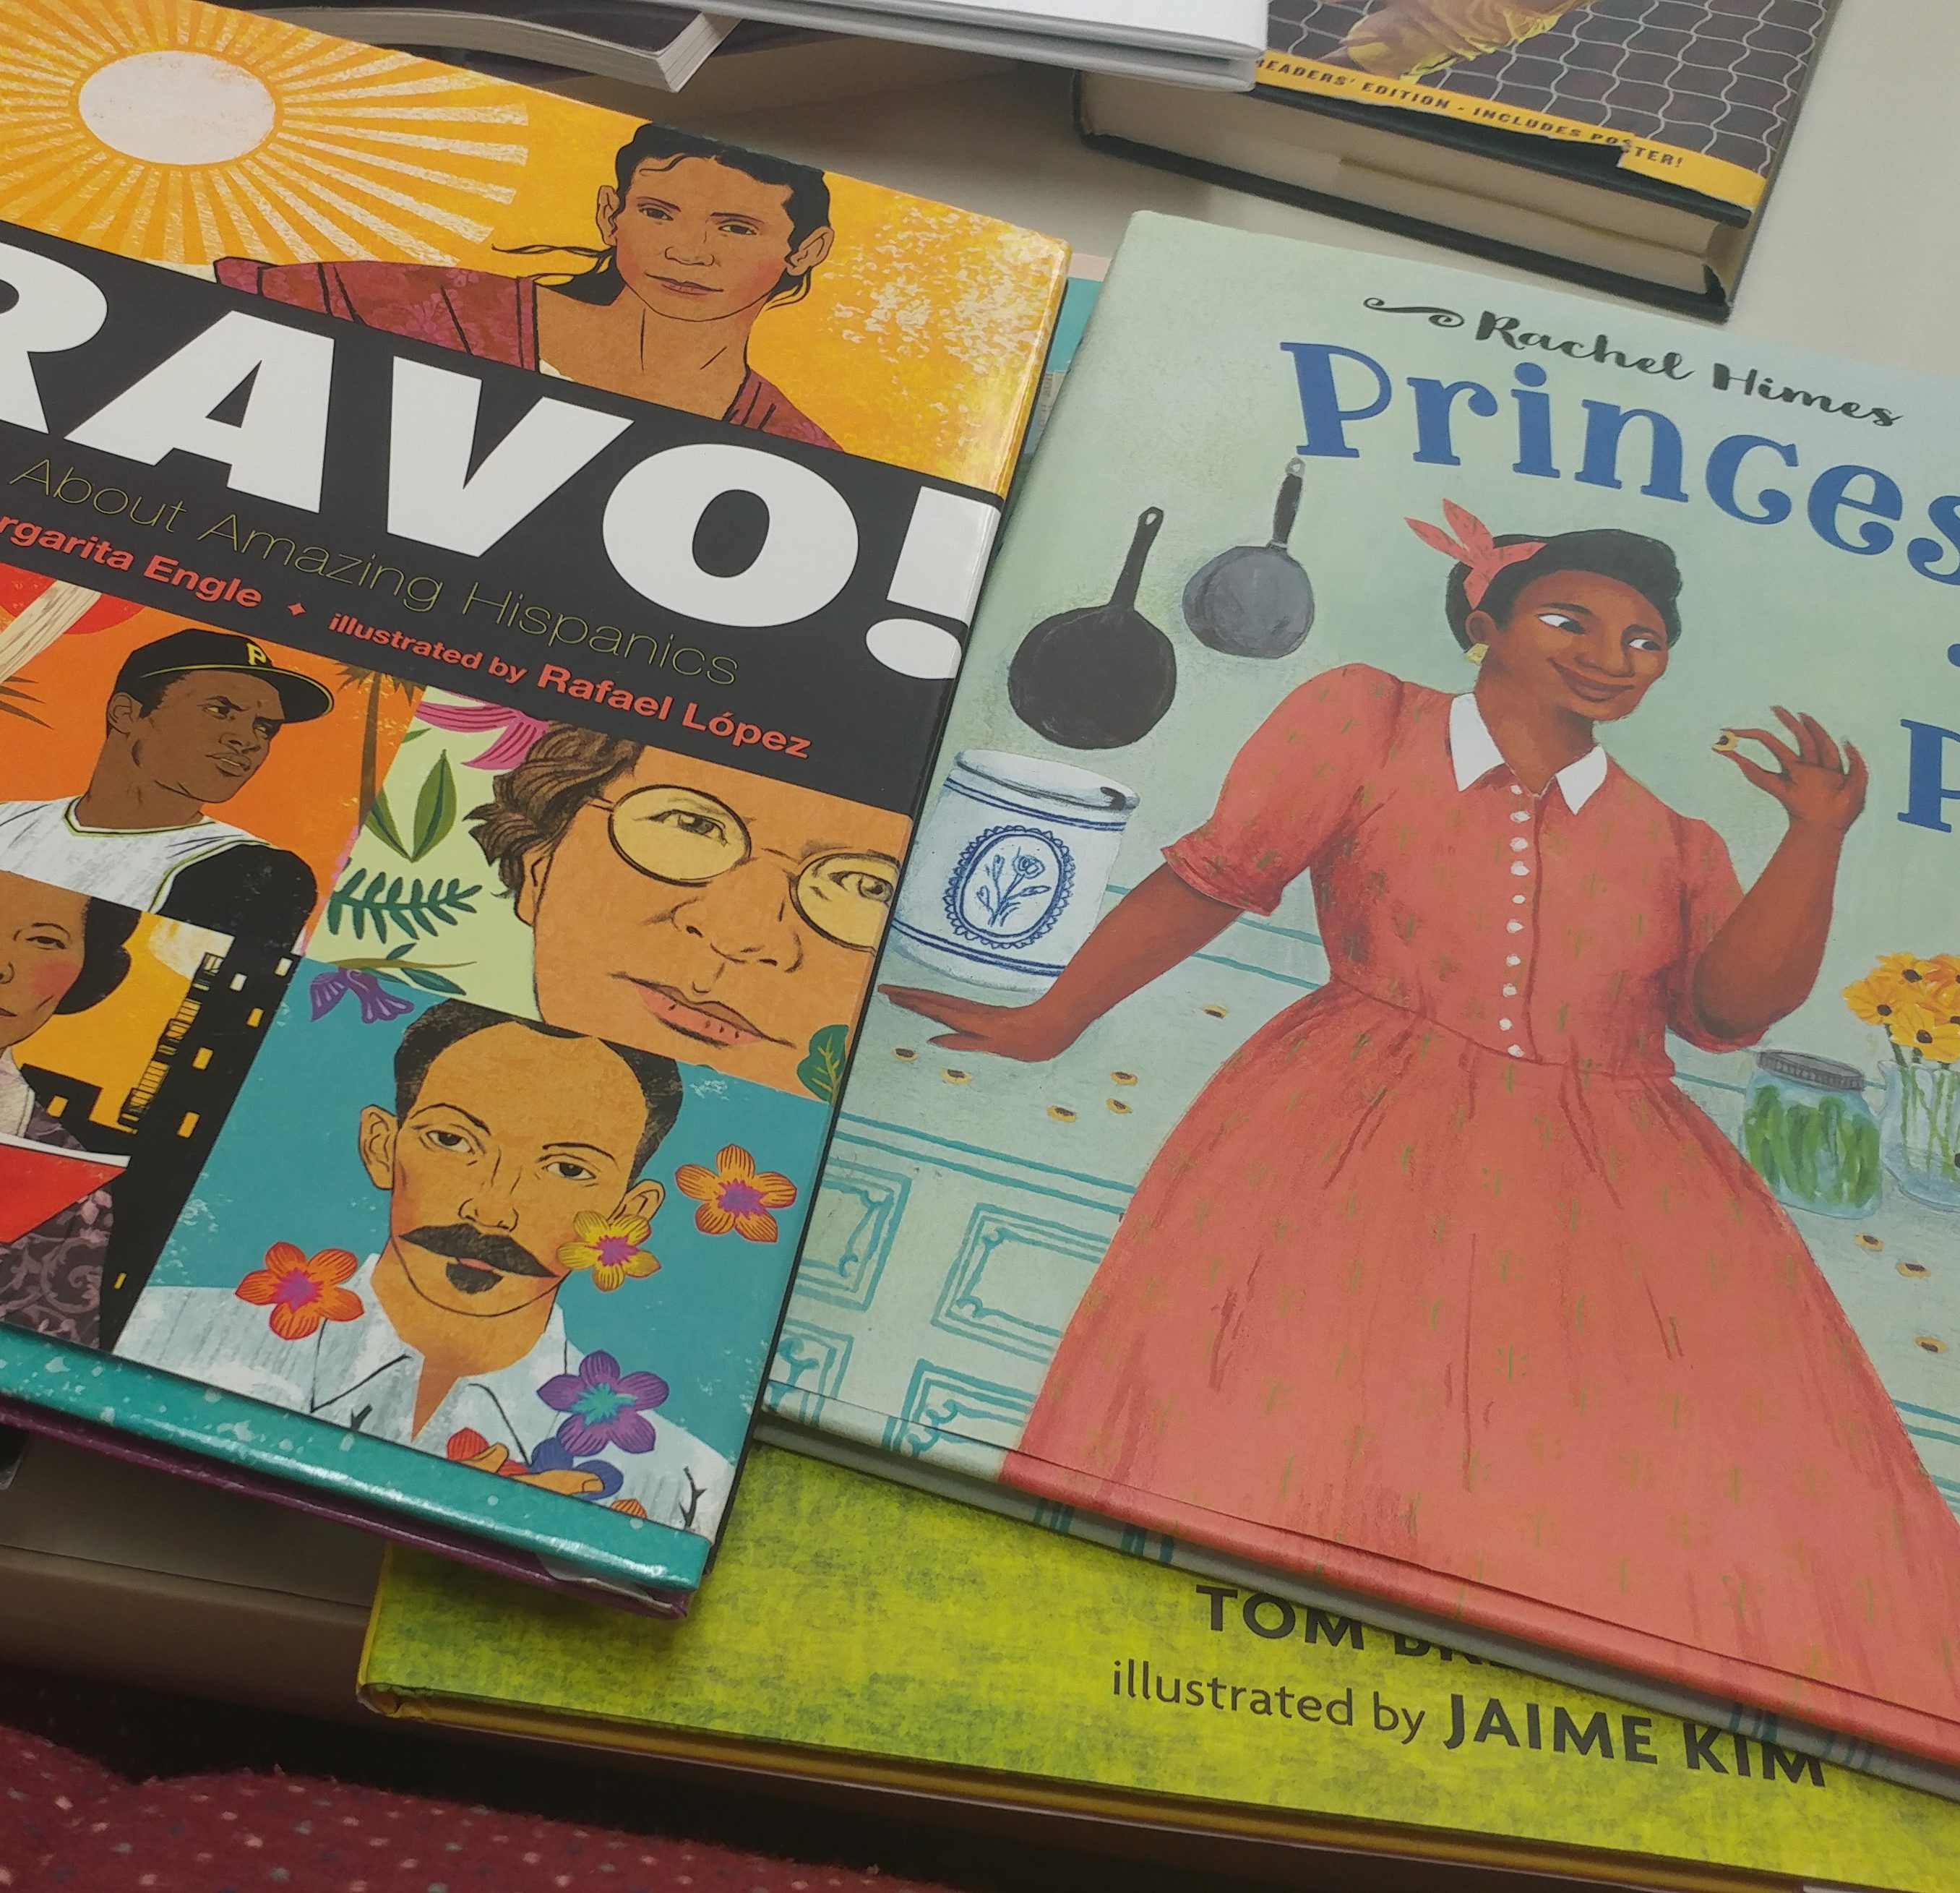 Celebrating diversity with children’s books